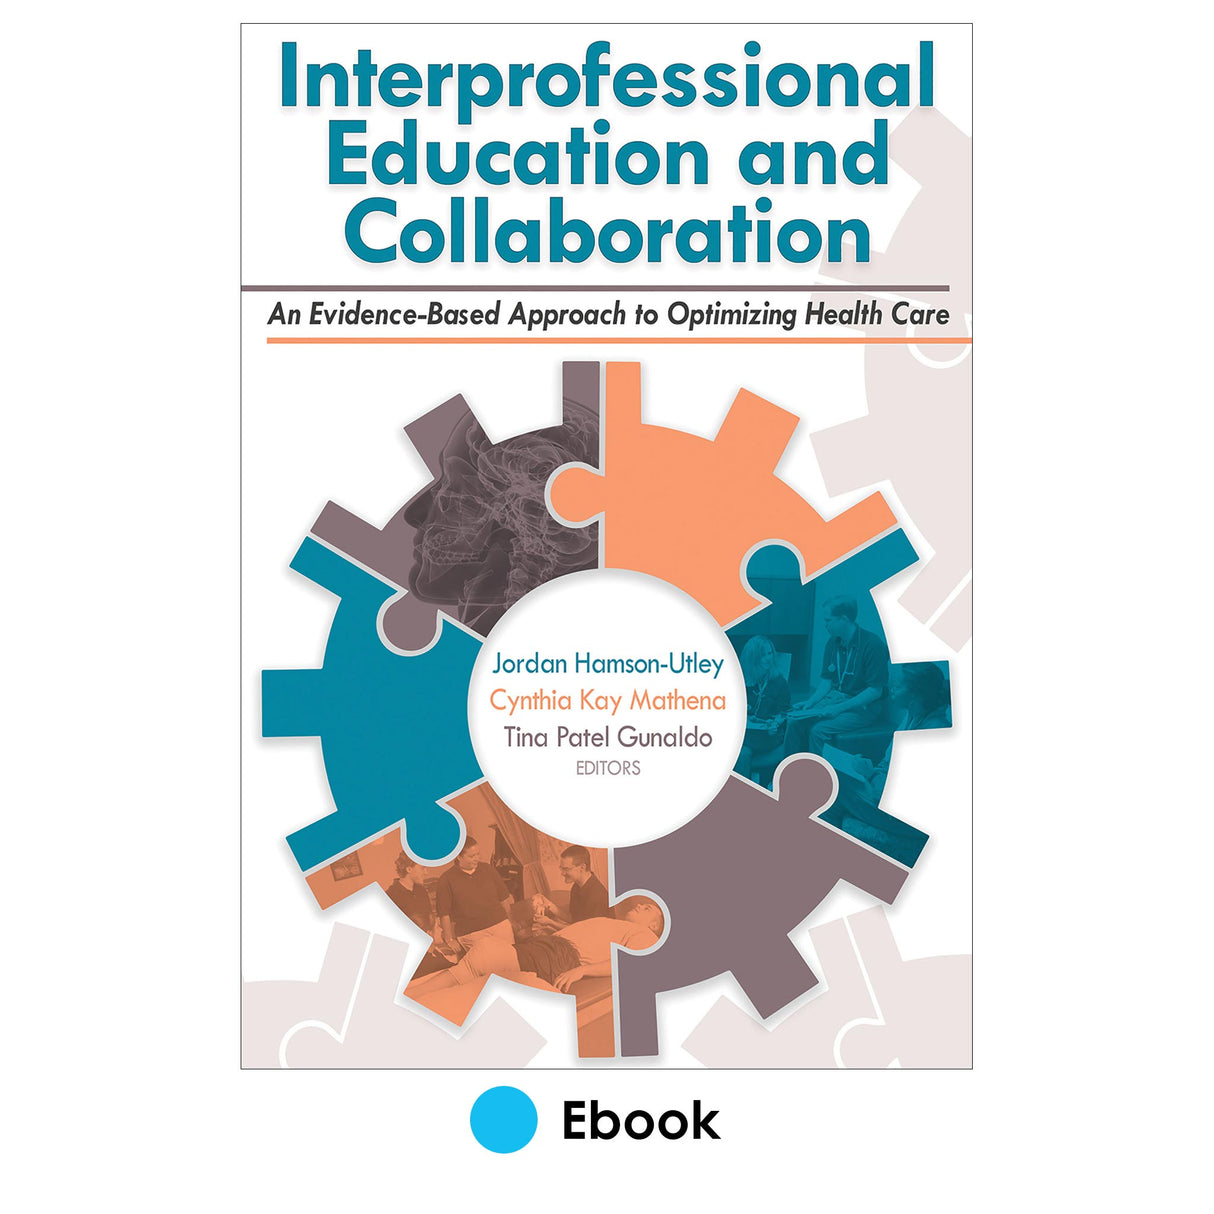 Interprofessional Education and Collaboration epub